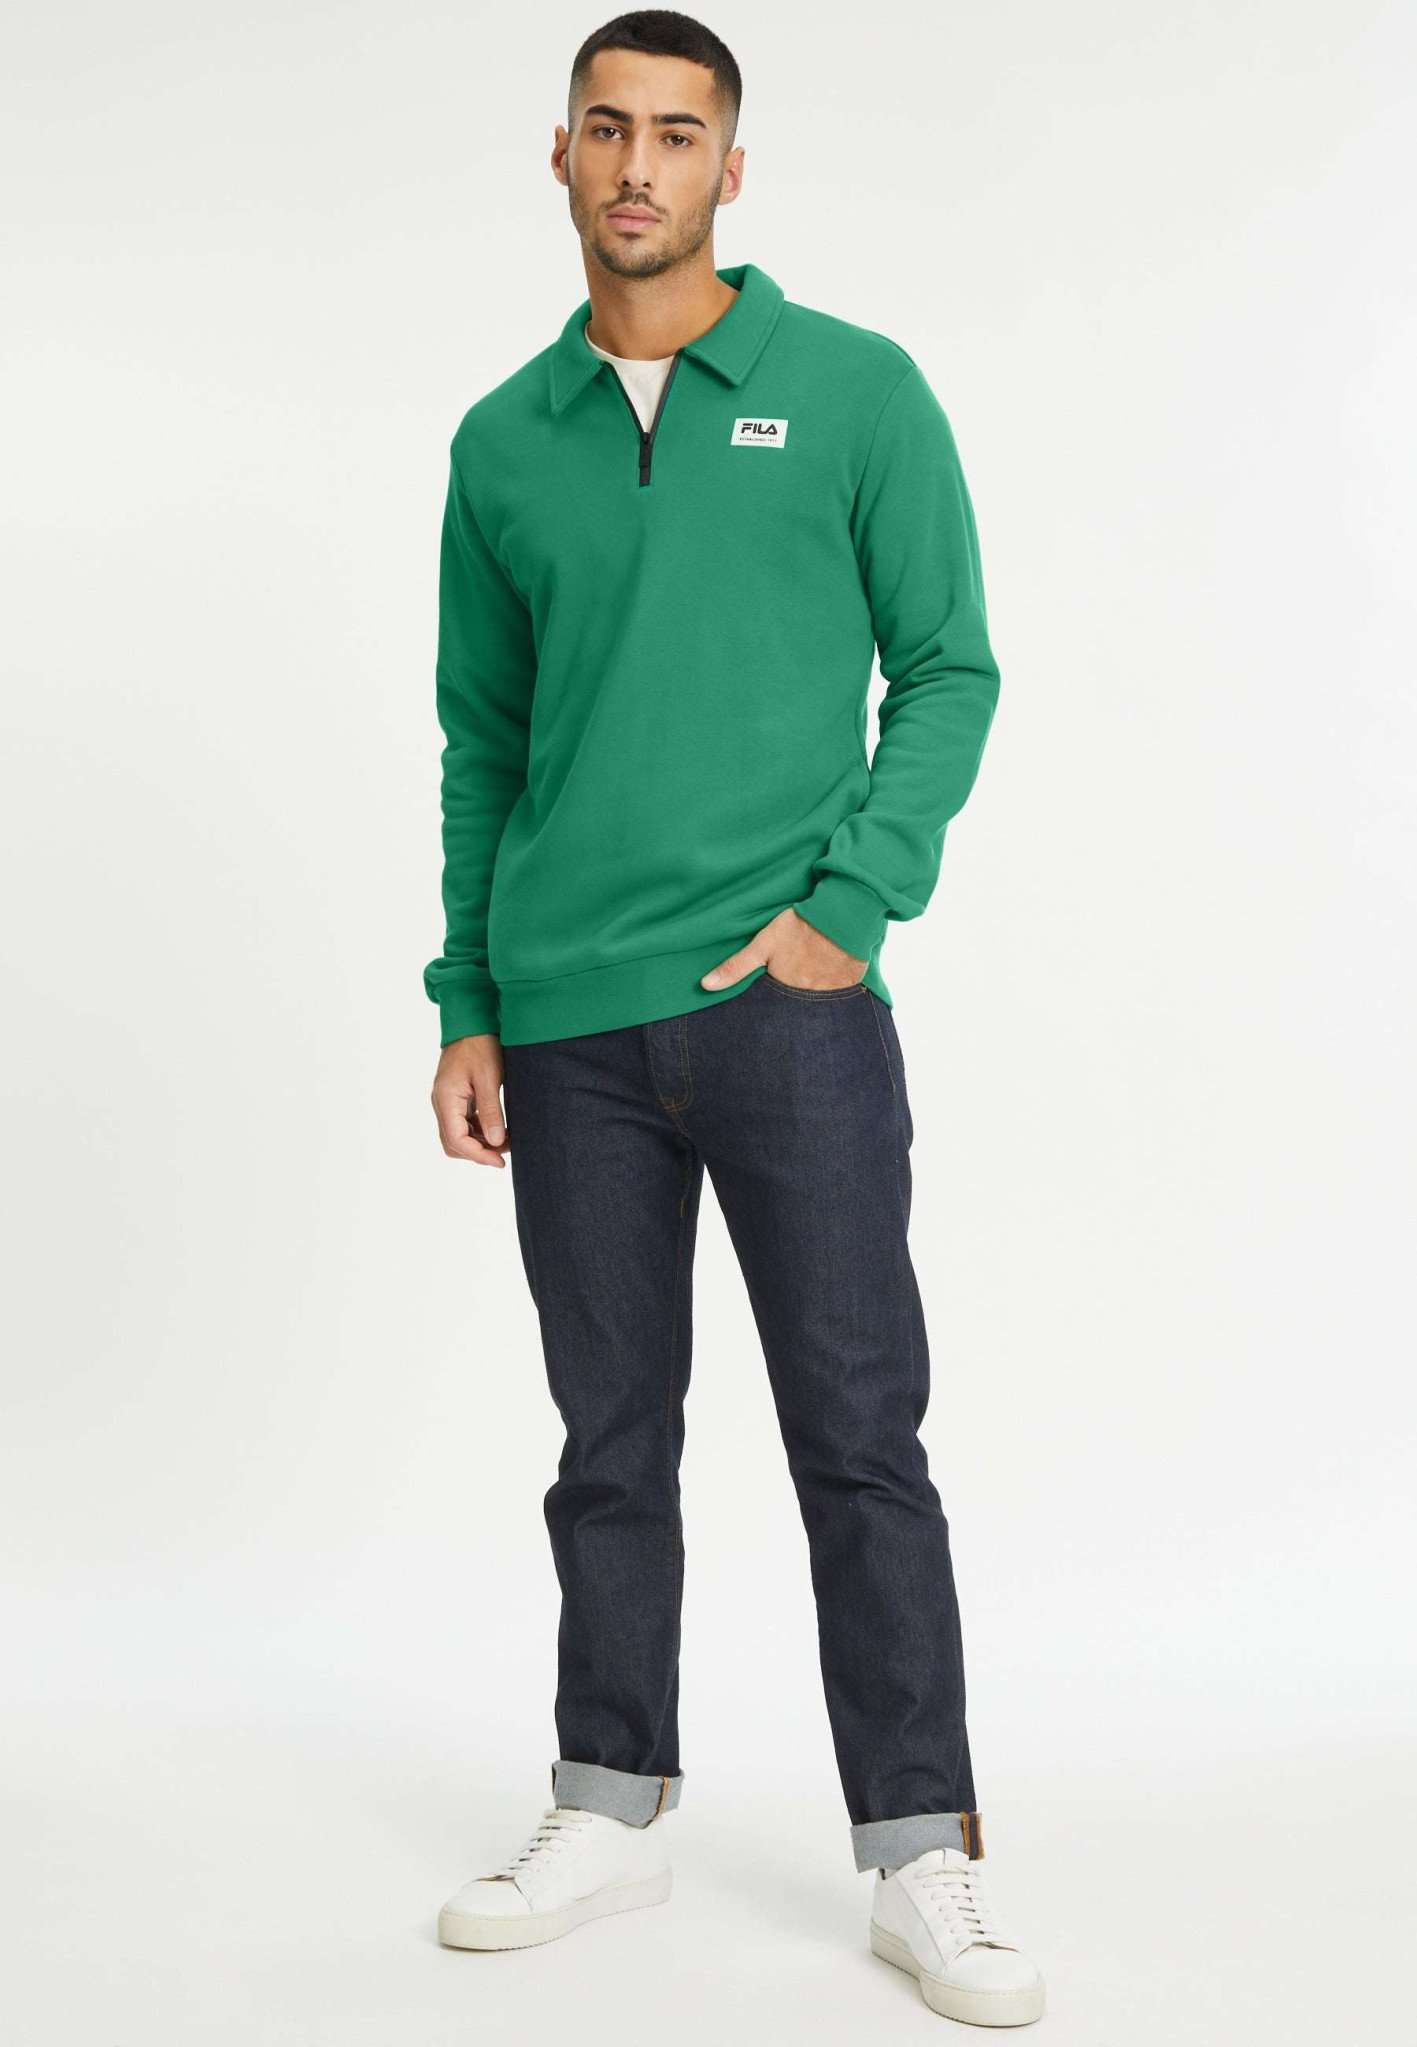 Toluca in Verdant Green Sweatshirts Fila   